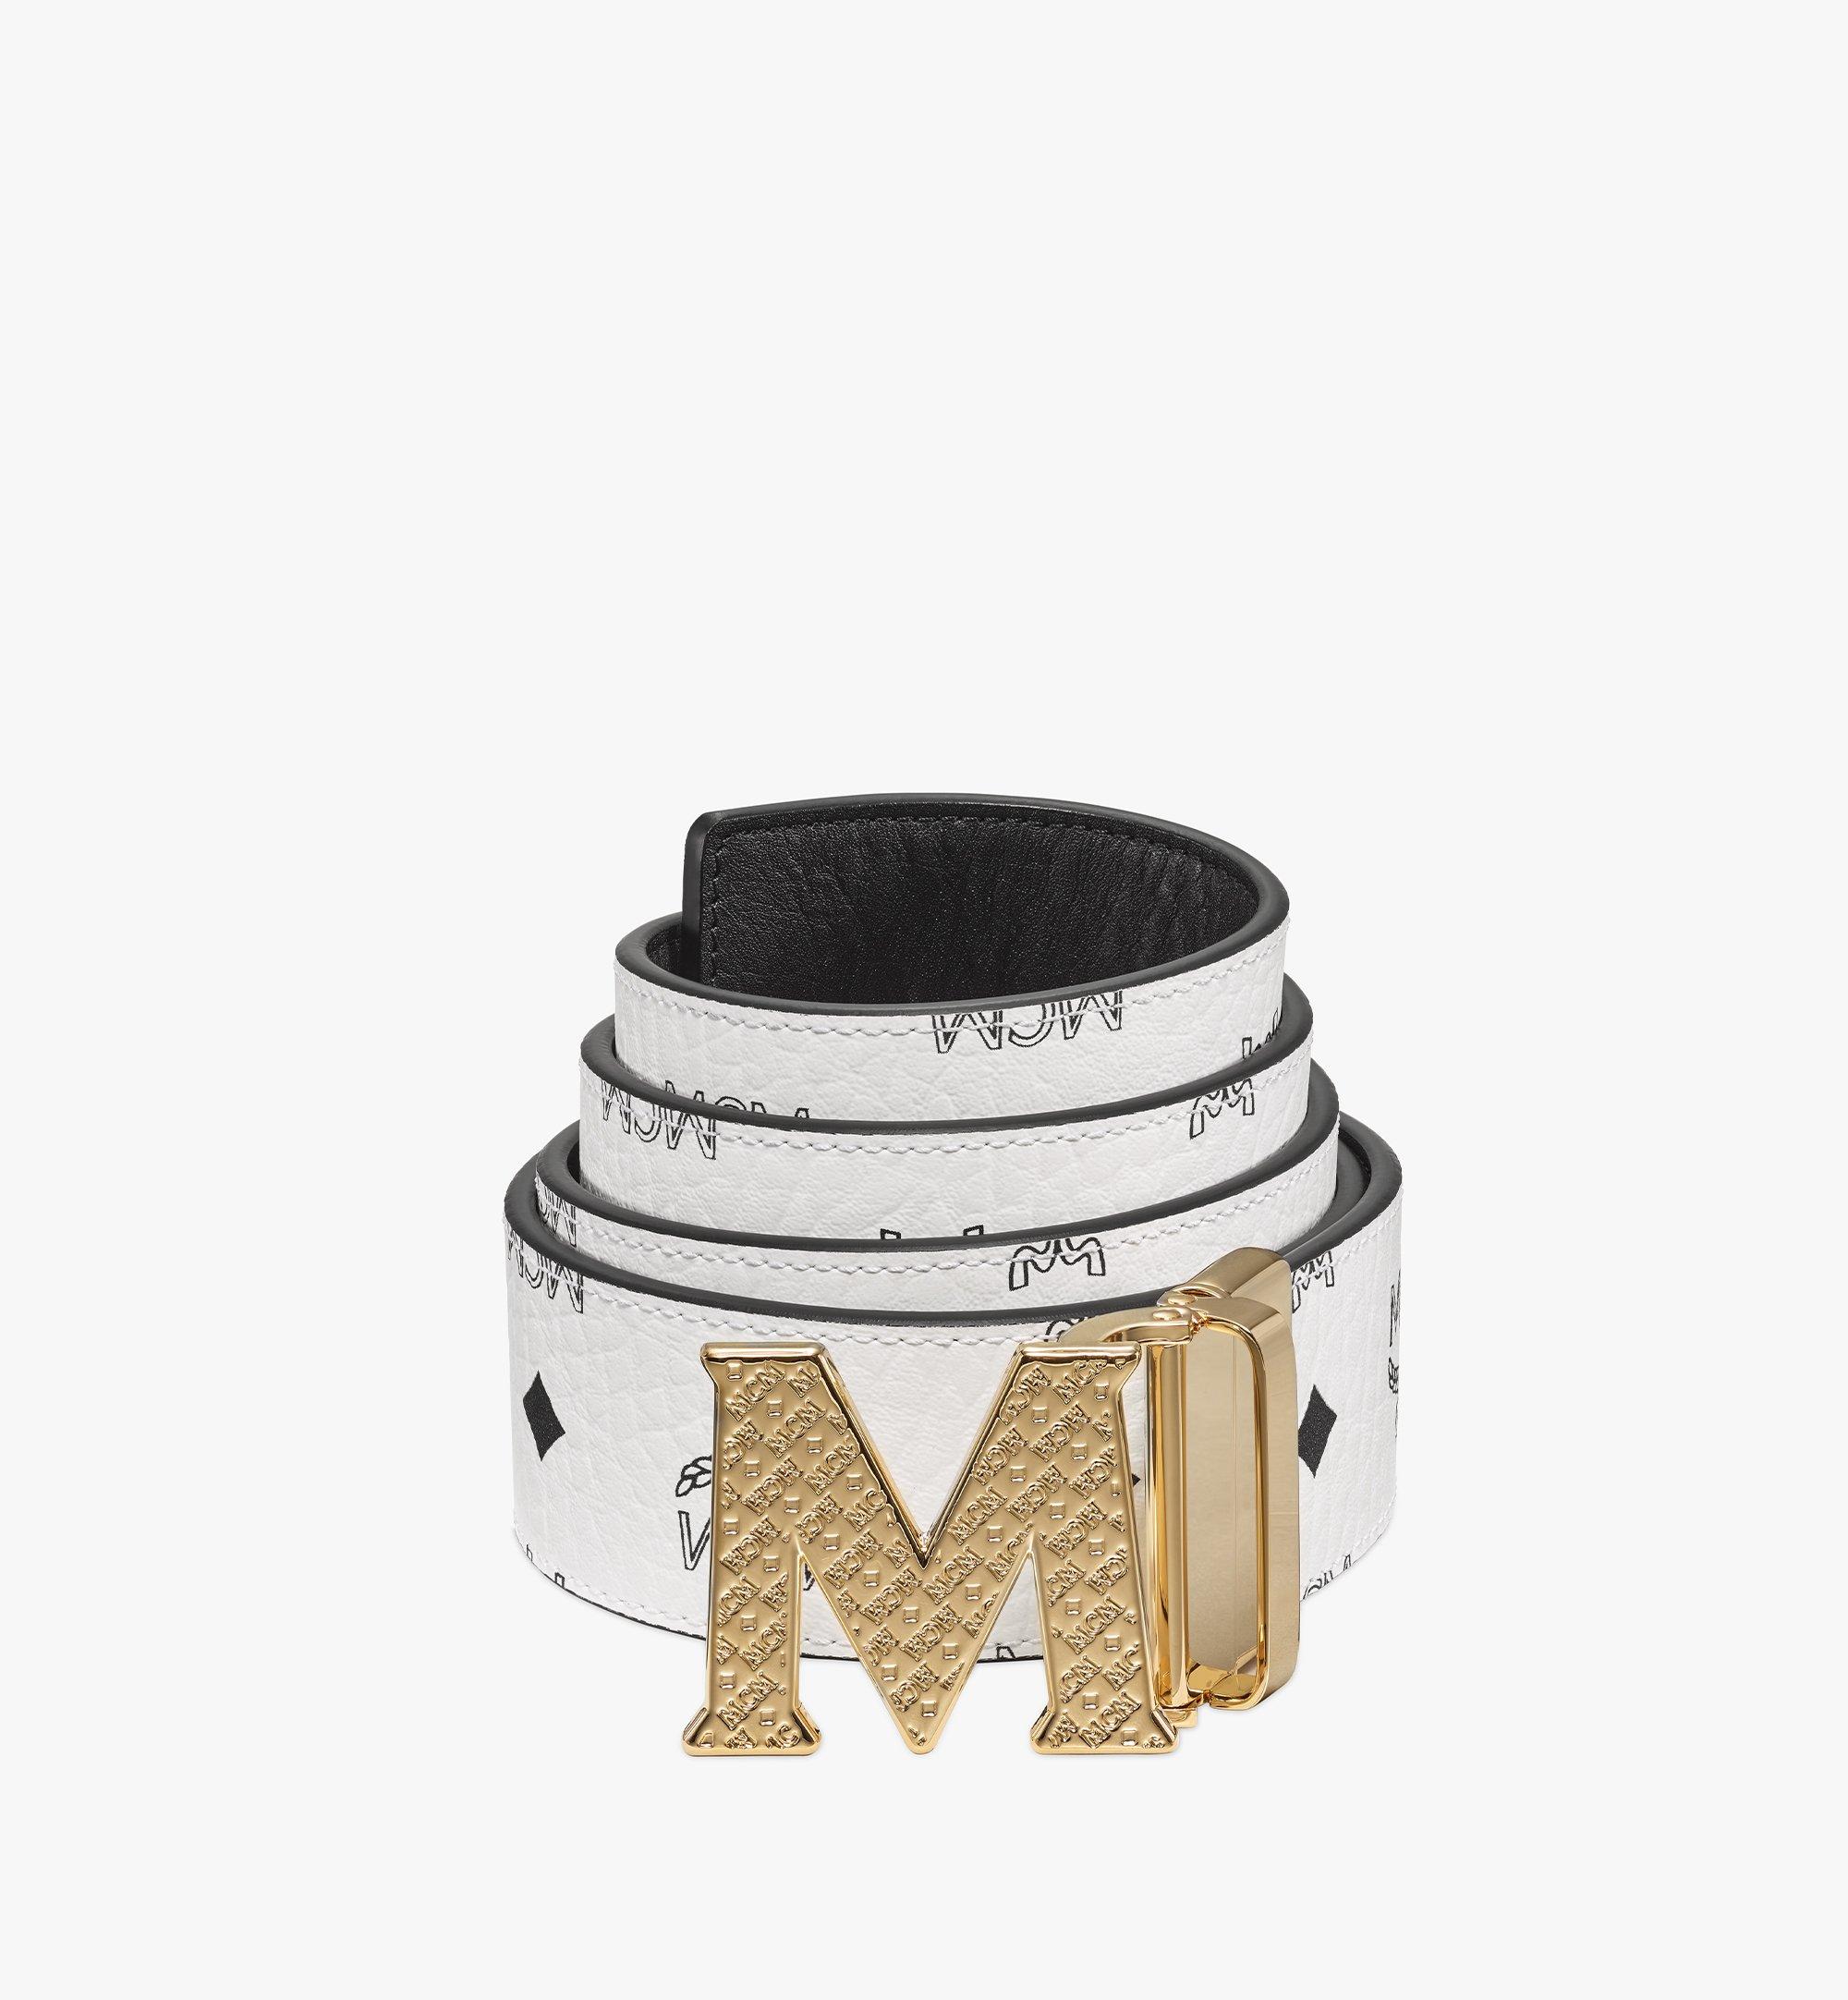 Mcm Belt White And Gold / Mcm white/black reversible belt claus m gold ...